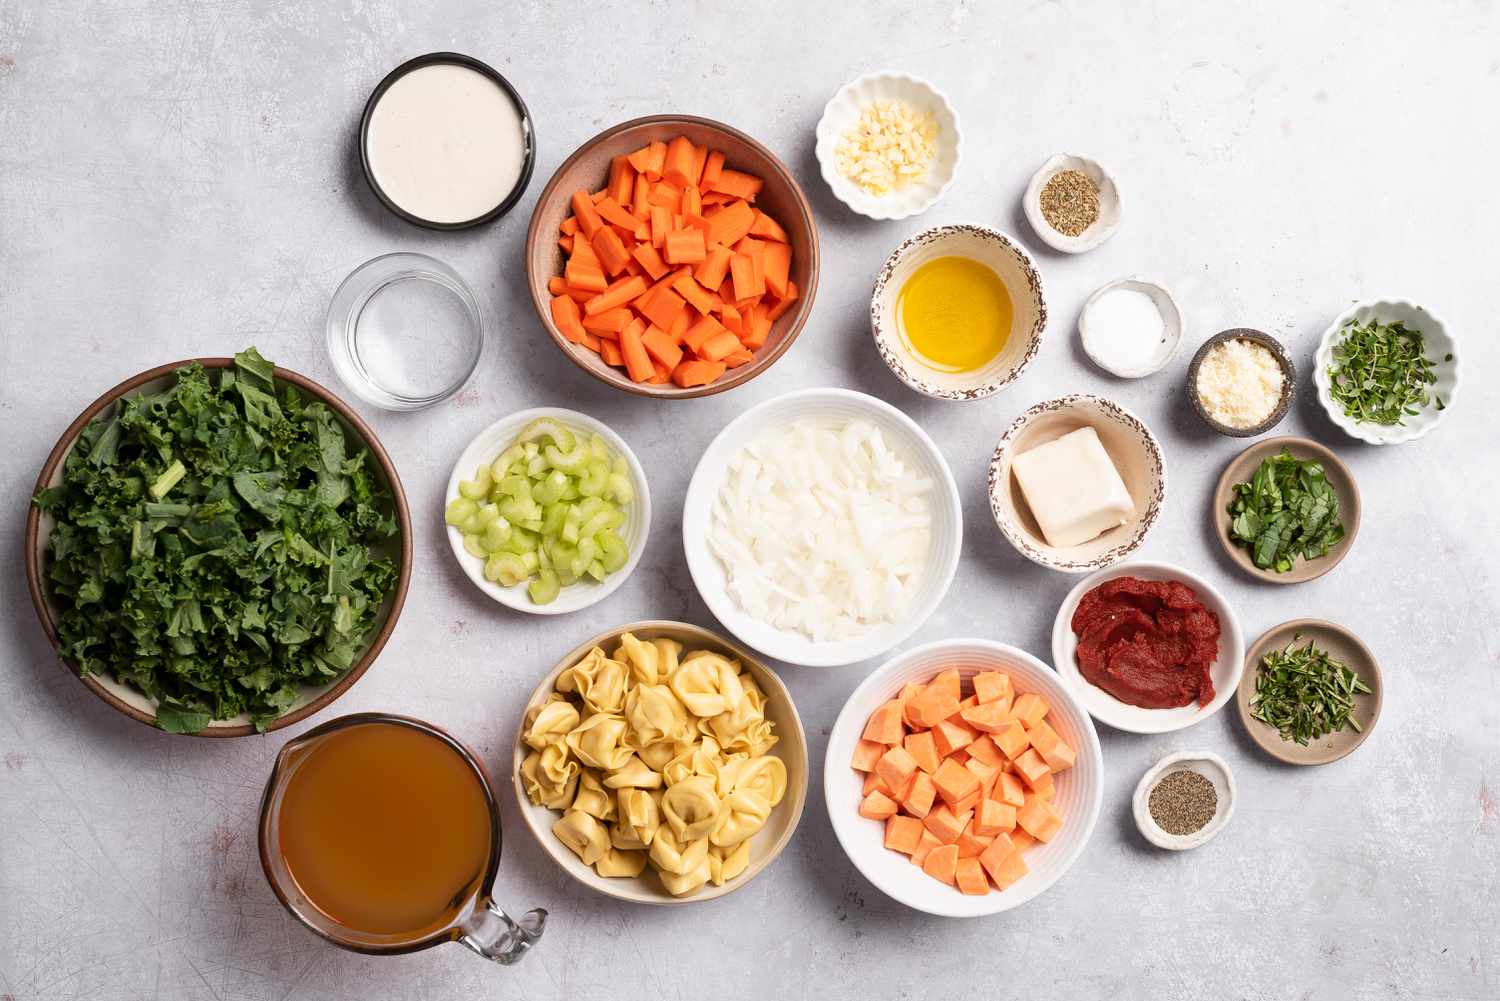 Ingredients to make vegan veggie tortellini soup